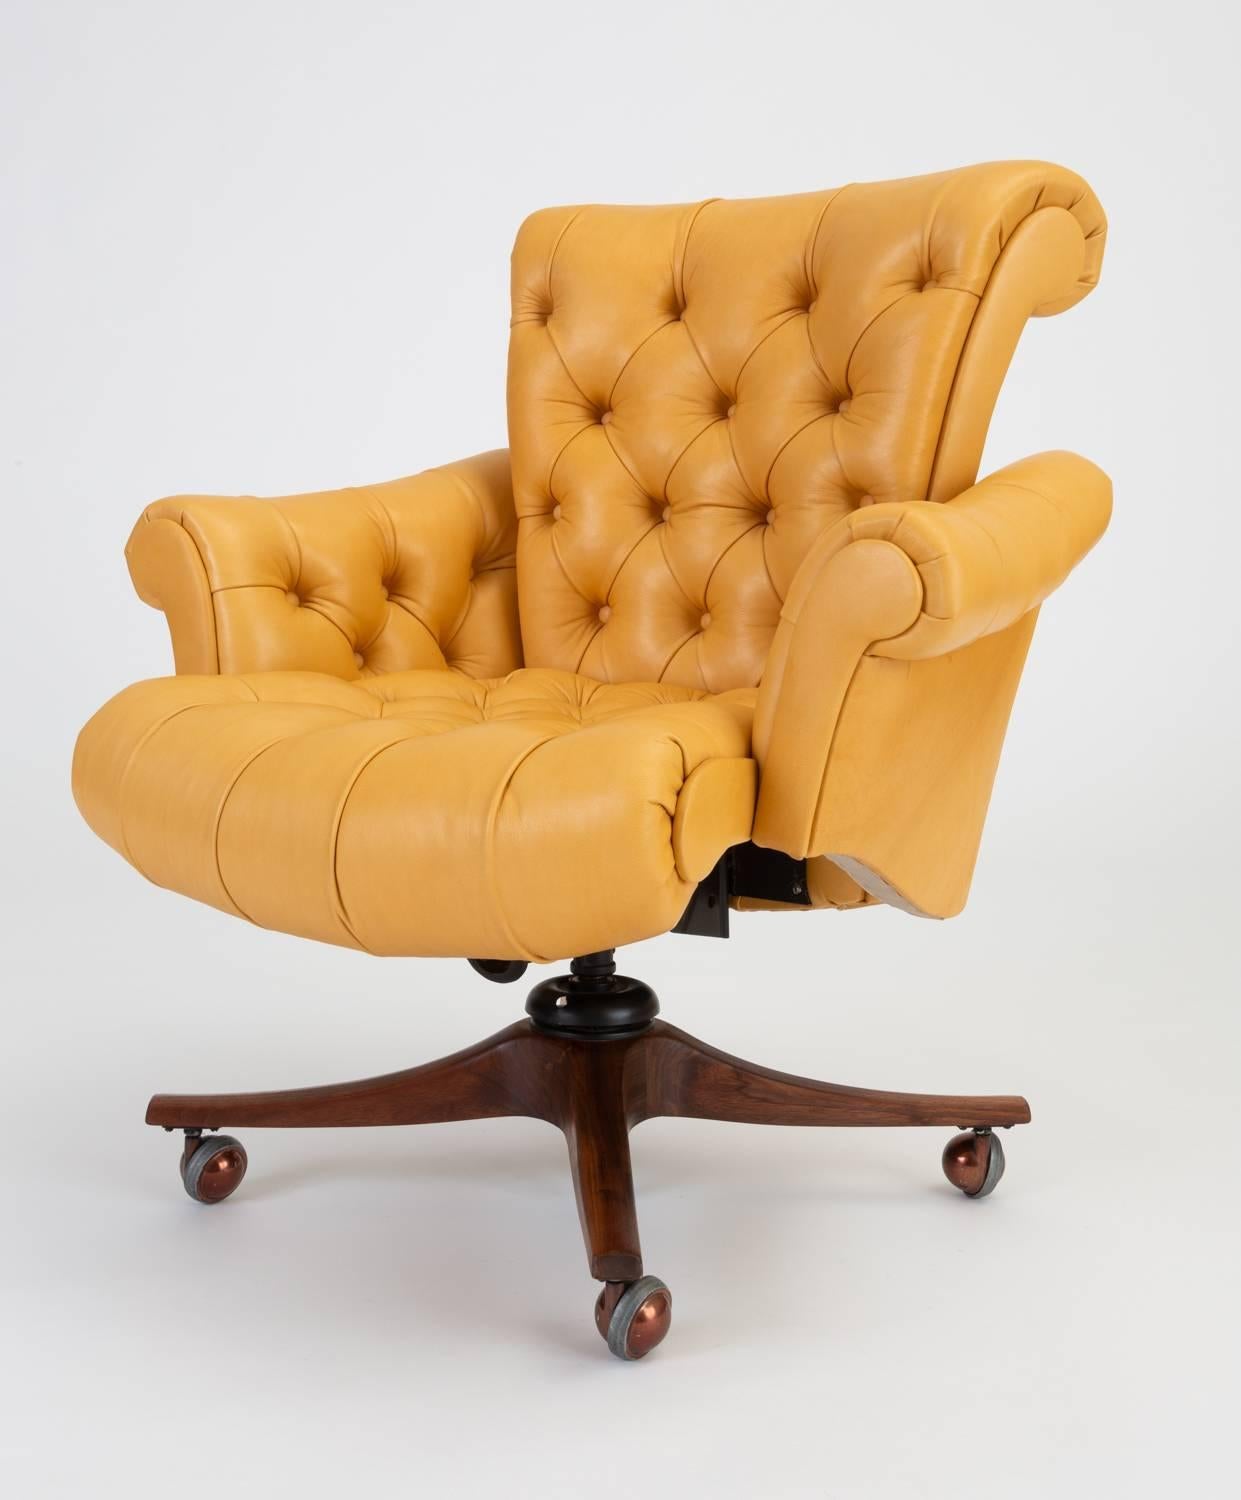 Mid-Century Modern Model 932 “In Clover” Executive Office Chair by Edward Wormley for Dunbar